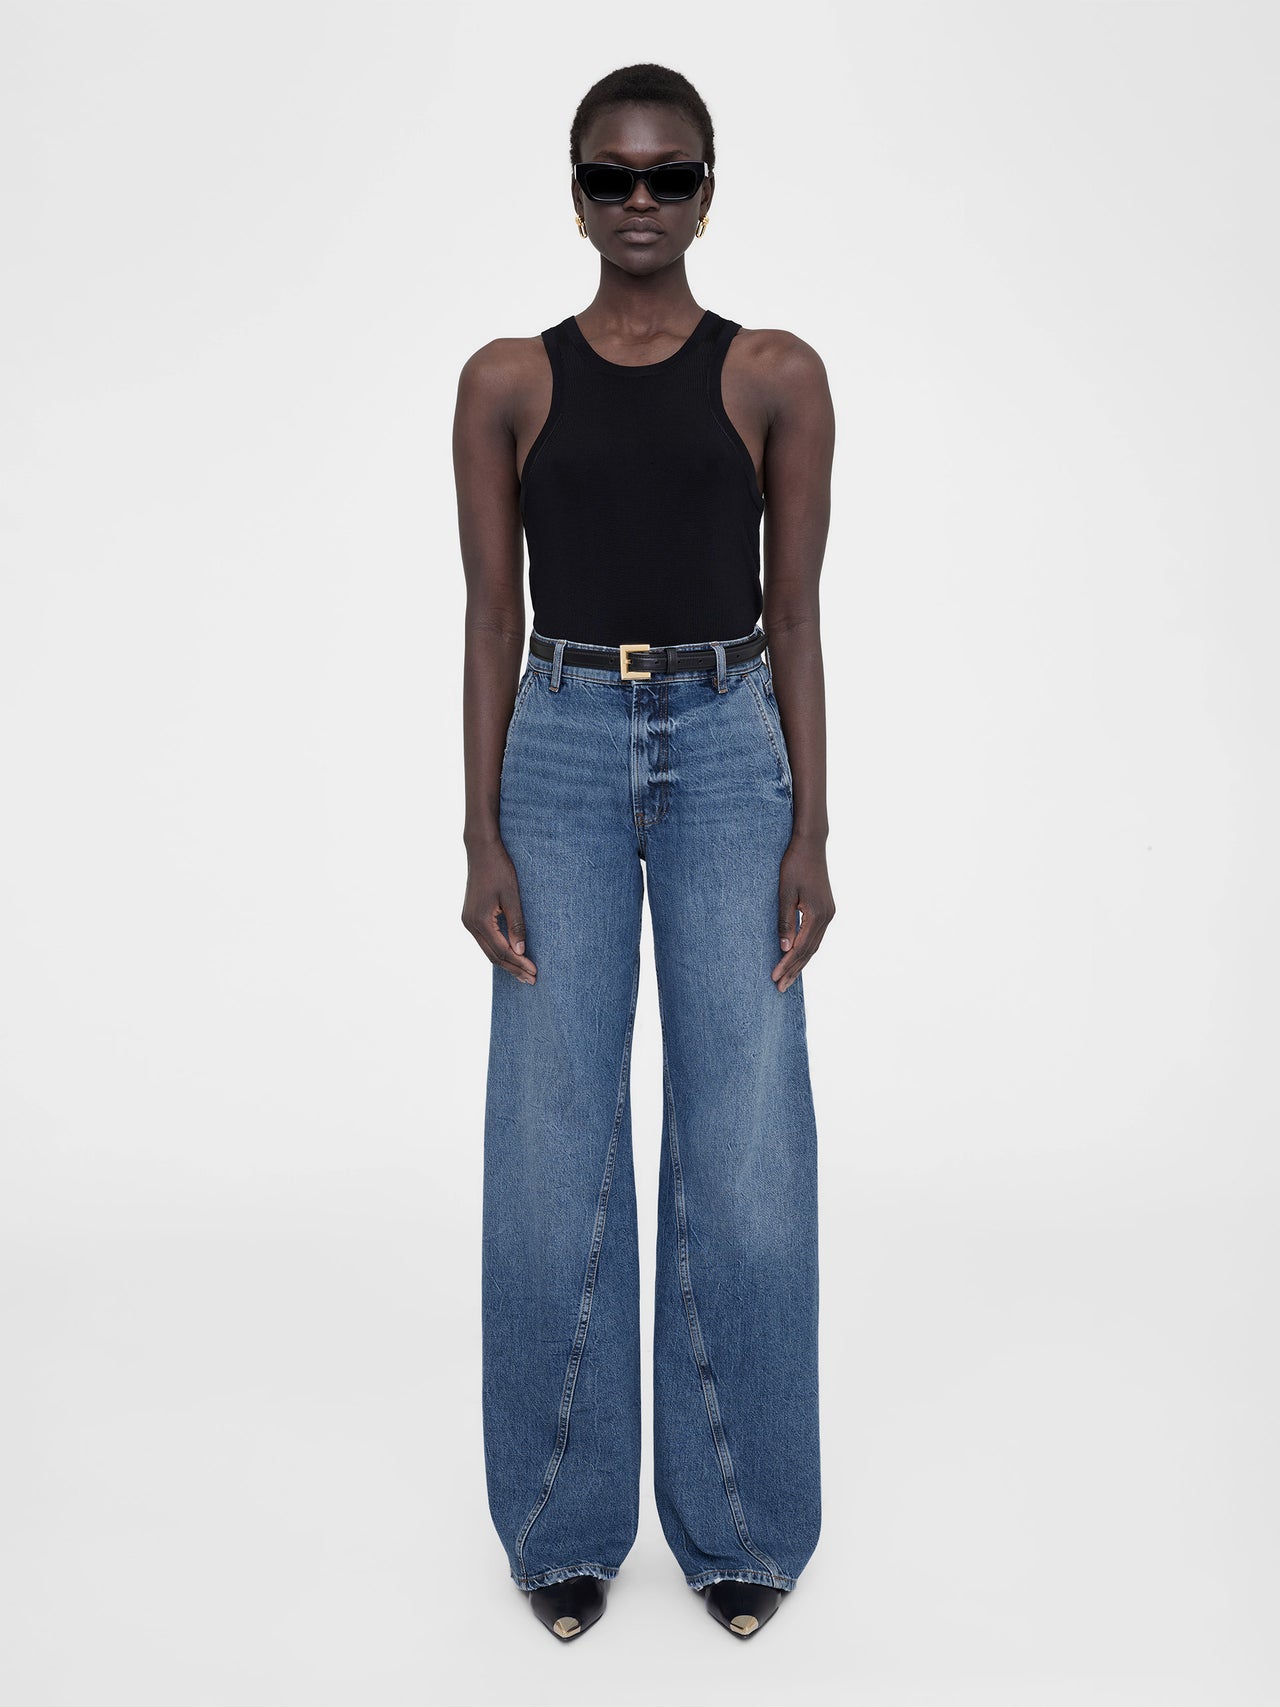 Anine Bing - Luxe Wardrobe Basics